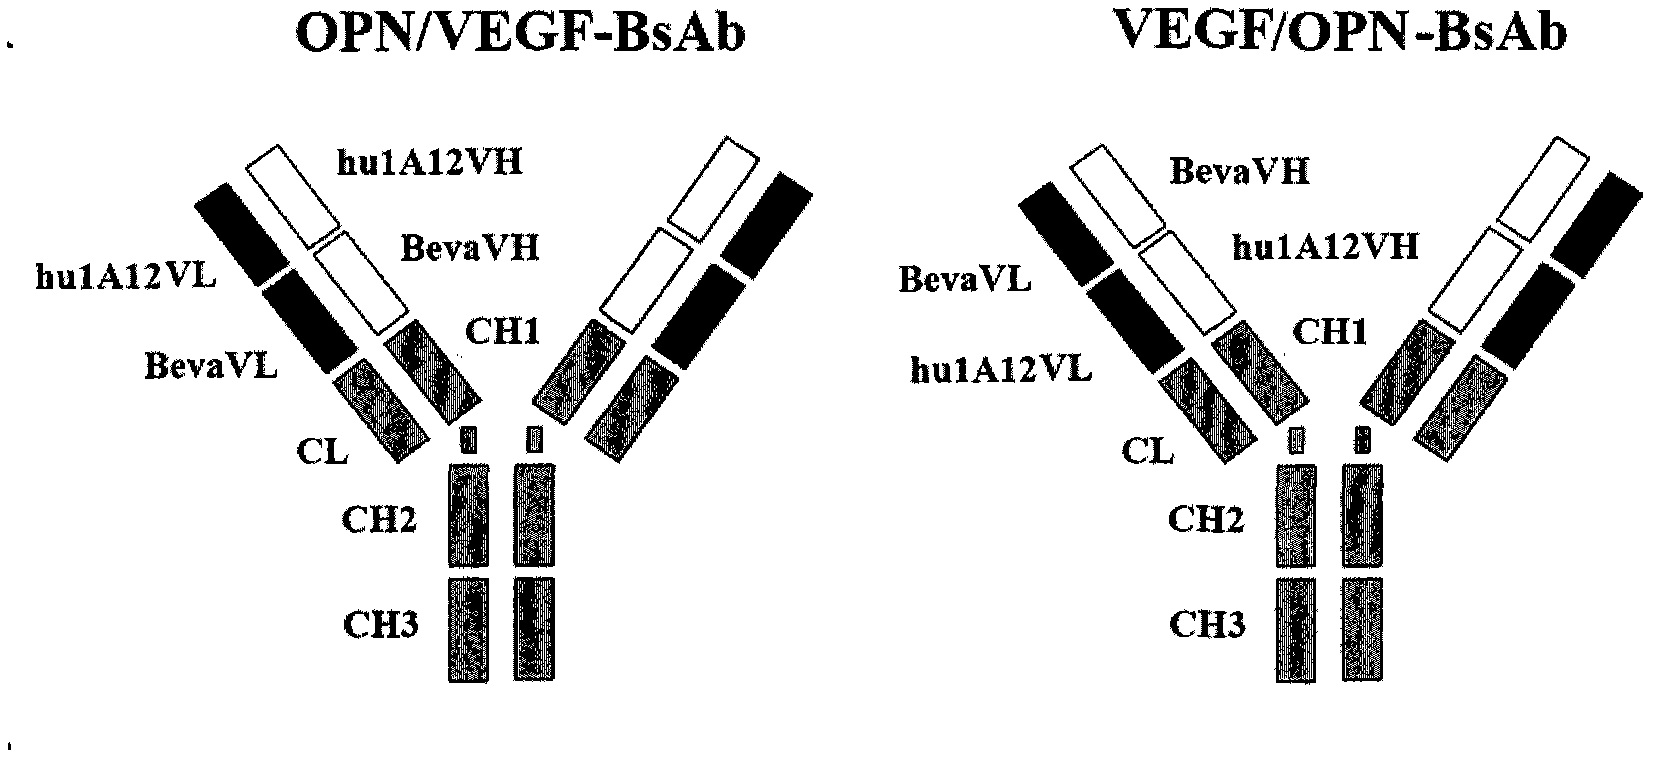 Anti-human VEGF/anti-OPN bispecific antibody, its preparation method and application